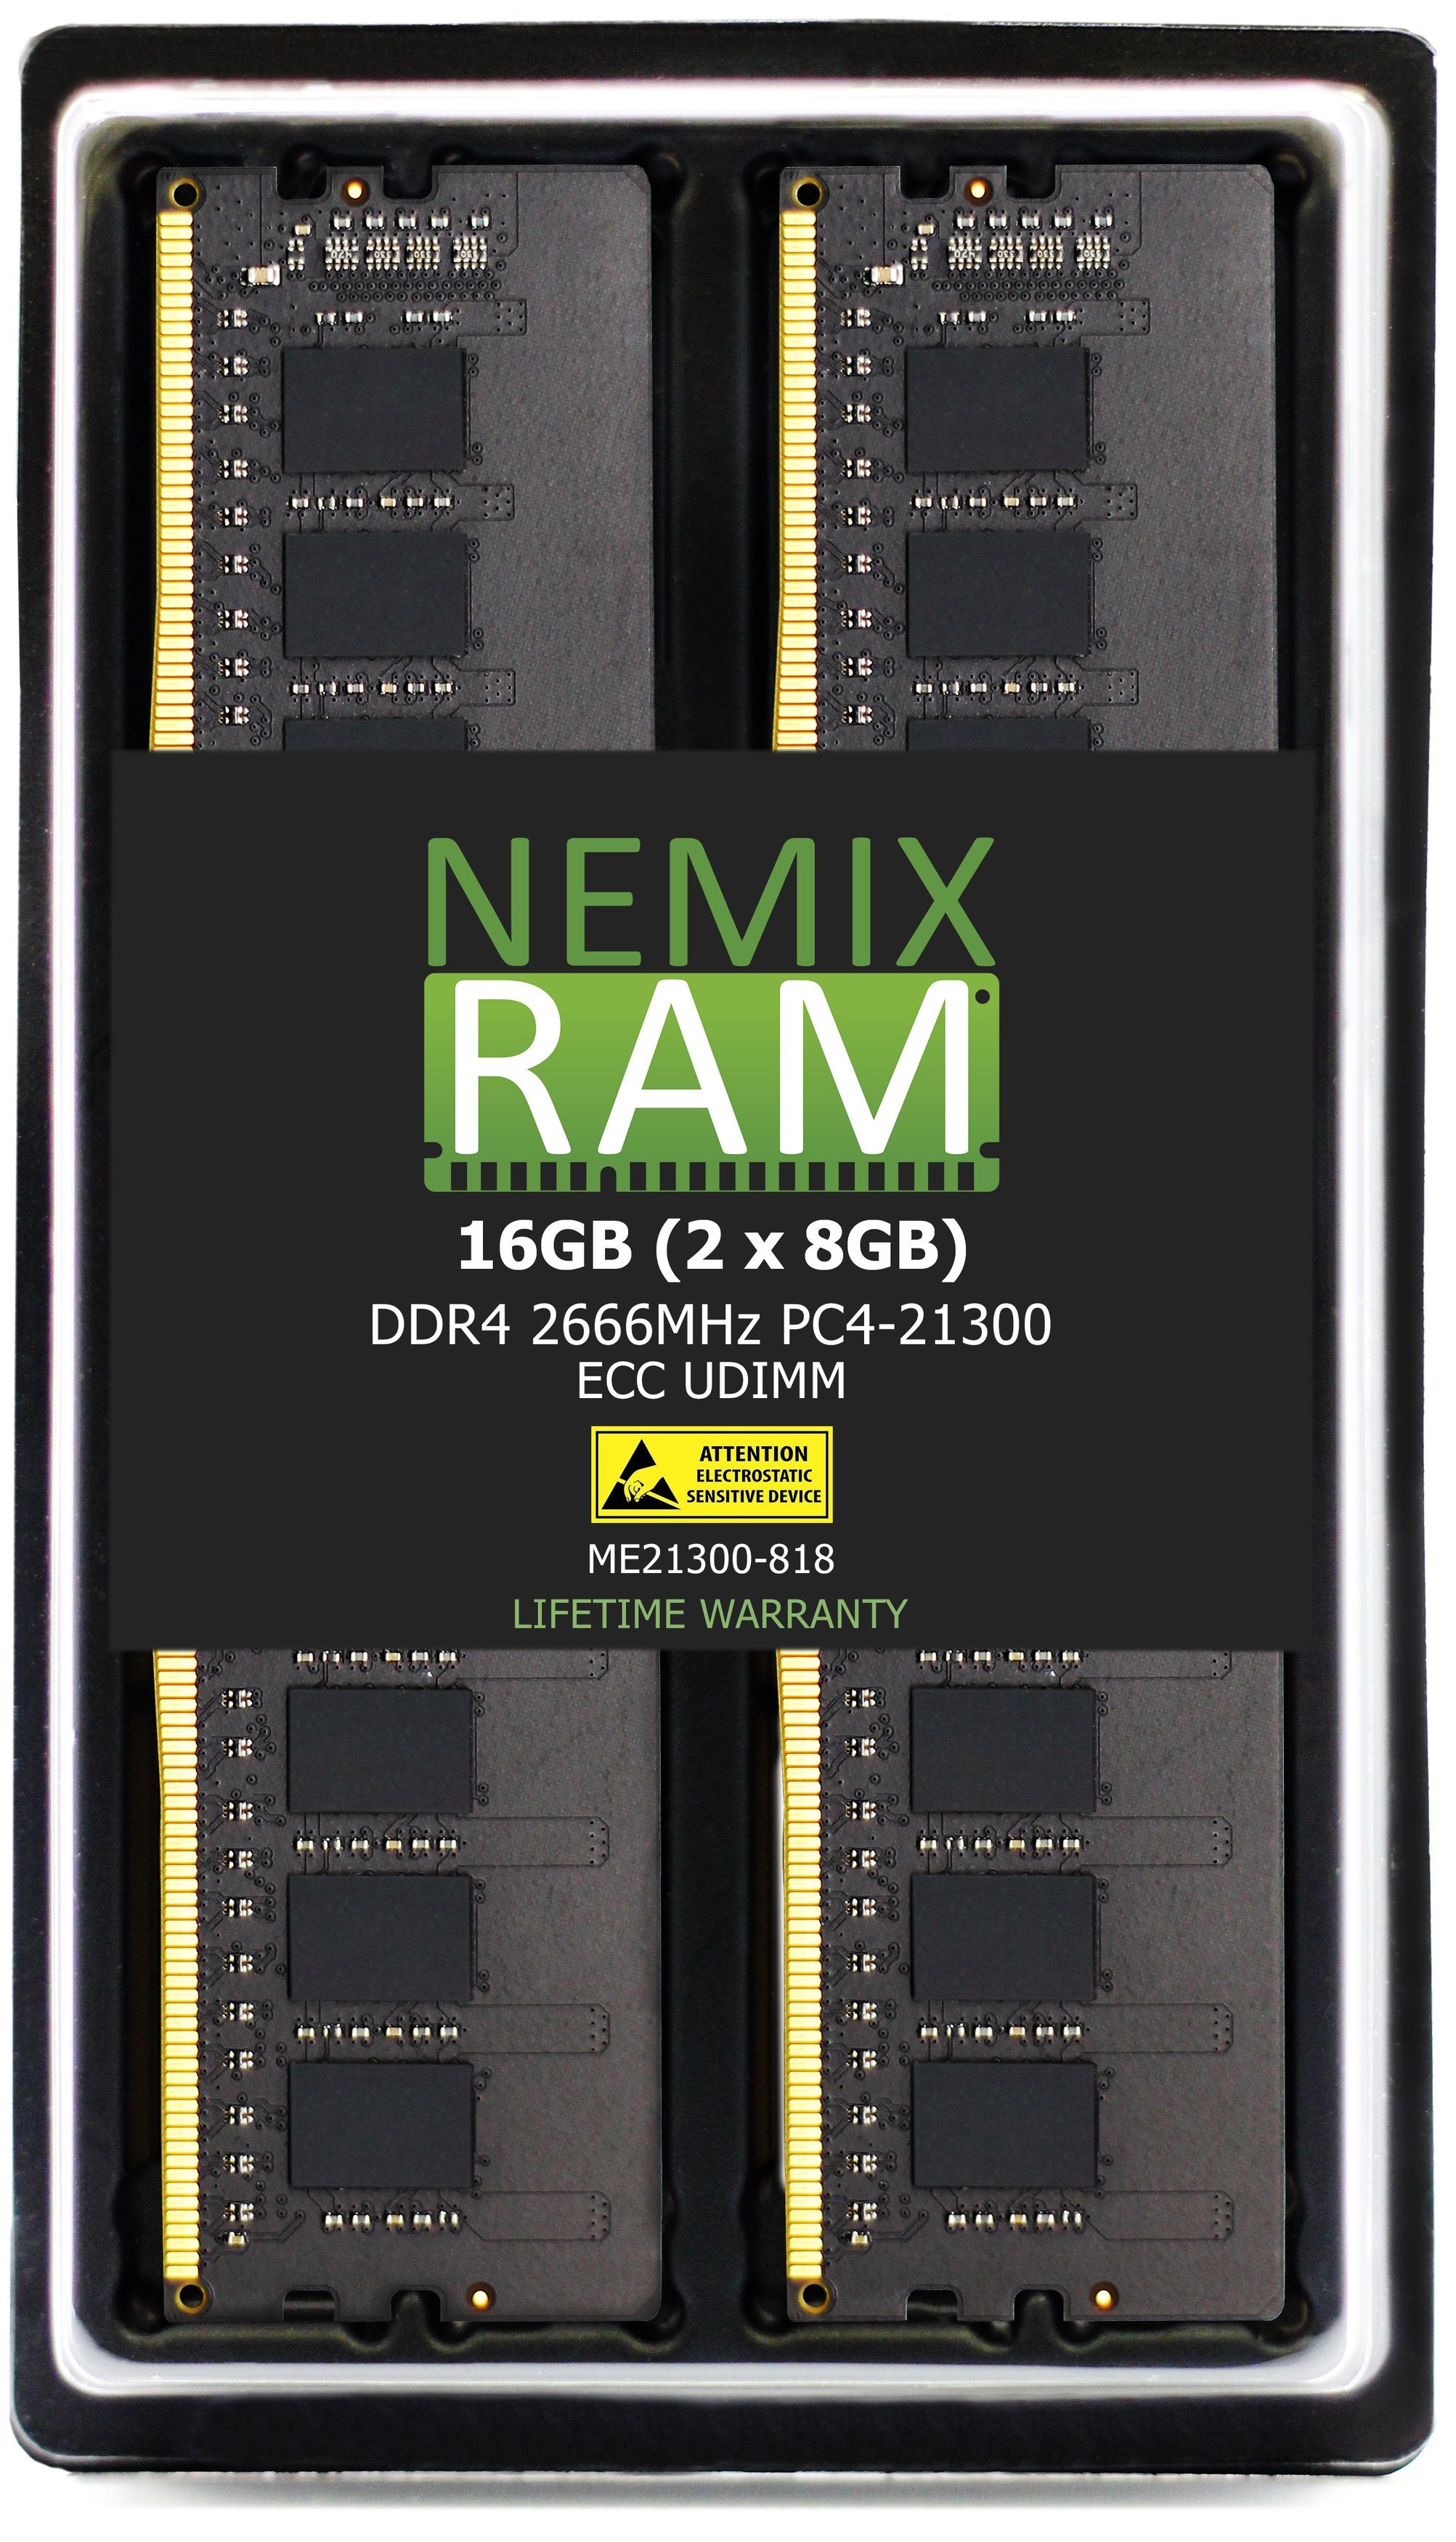 NEMIX RAM Memory Upgrade equivalent to ASUSTOR AS-8GECD4-U 92M11-S80EUD40 ECC UDIMM Memory Module